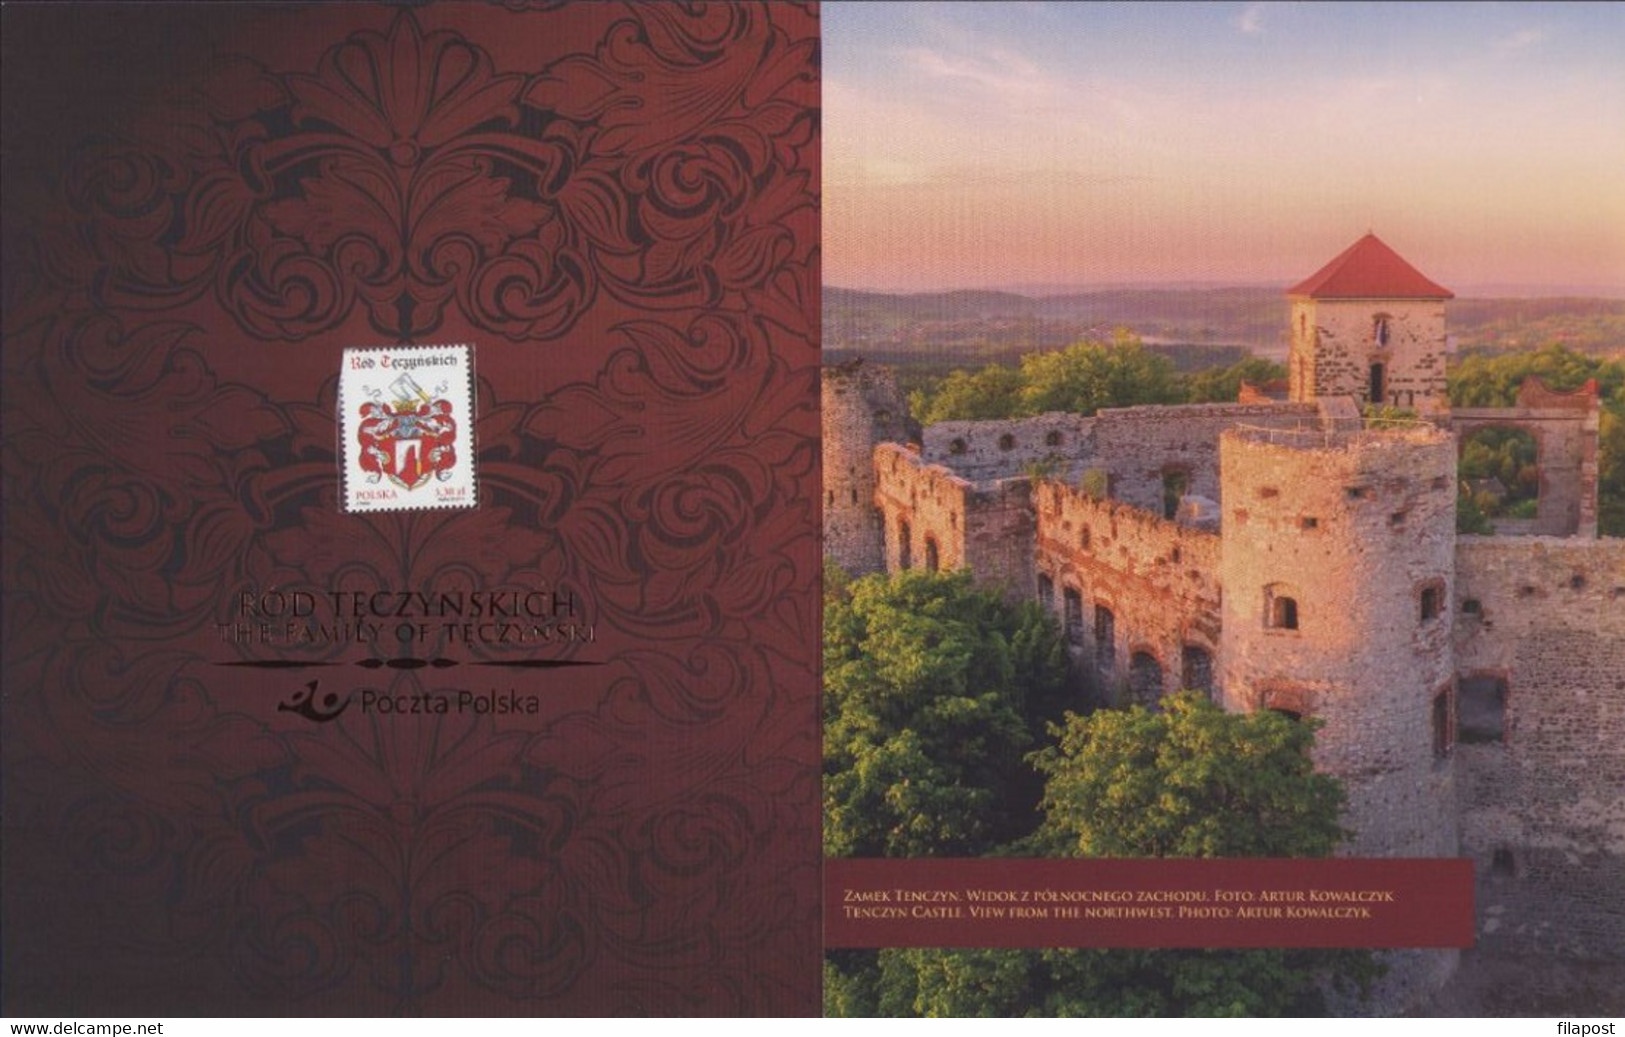 POLAND 2019 Booklet / The Family Of Teczynski, Kingdom Of Poland, Piast Dynasty, Jagiellon Dynasty / With Stamp MNH** - Markenheftchen